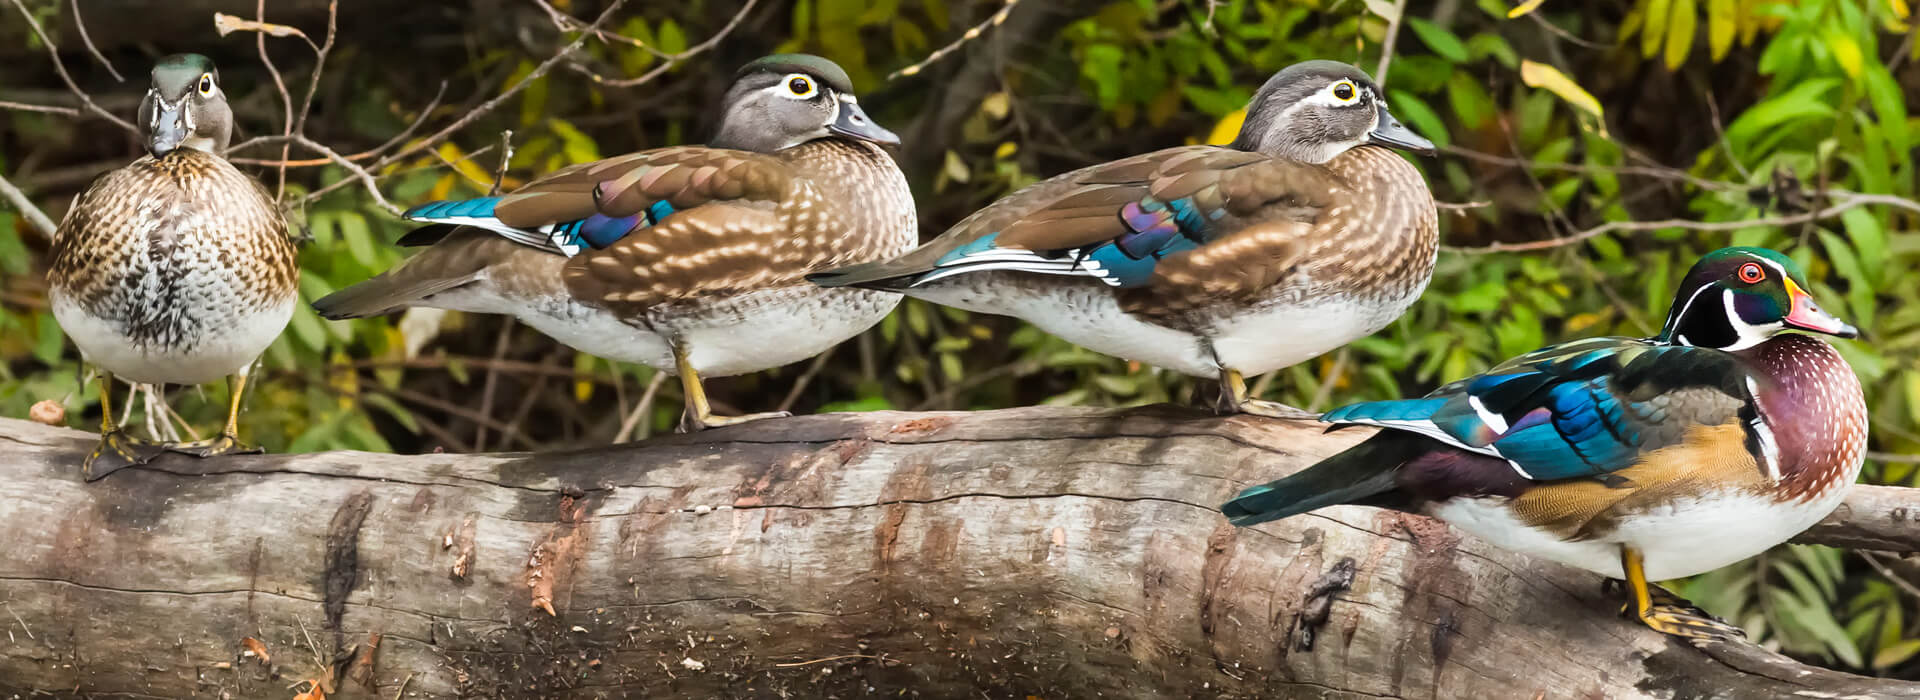 Wood Ducks, Paul Reeves Photography, Shutterstock